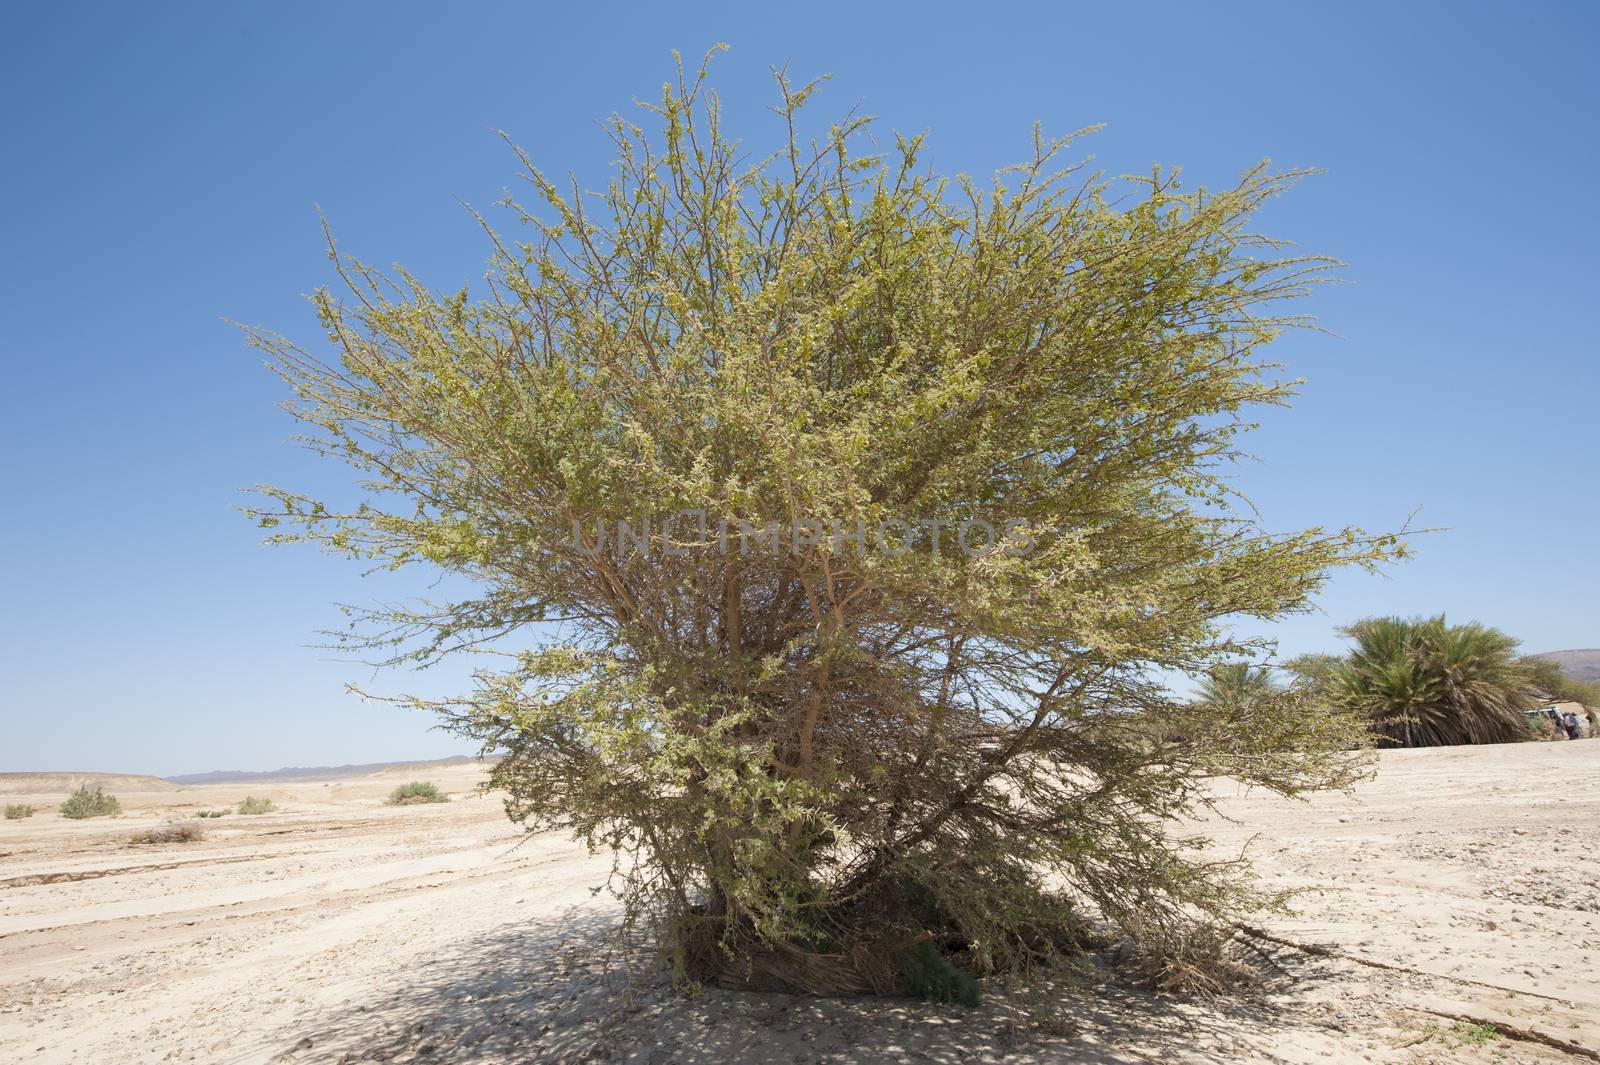 Sahara acacia tree acacia raddiana in an arid desert landscape